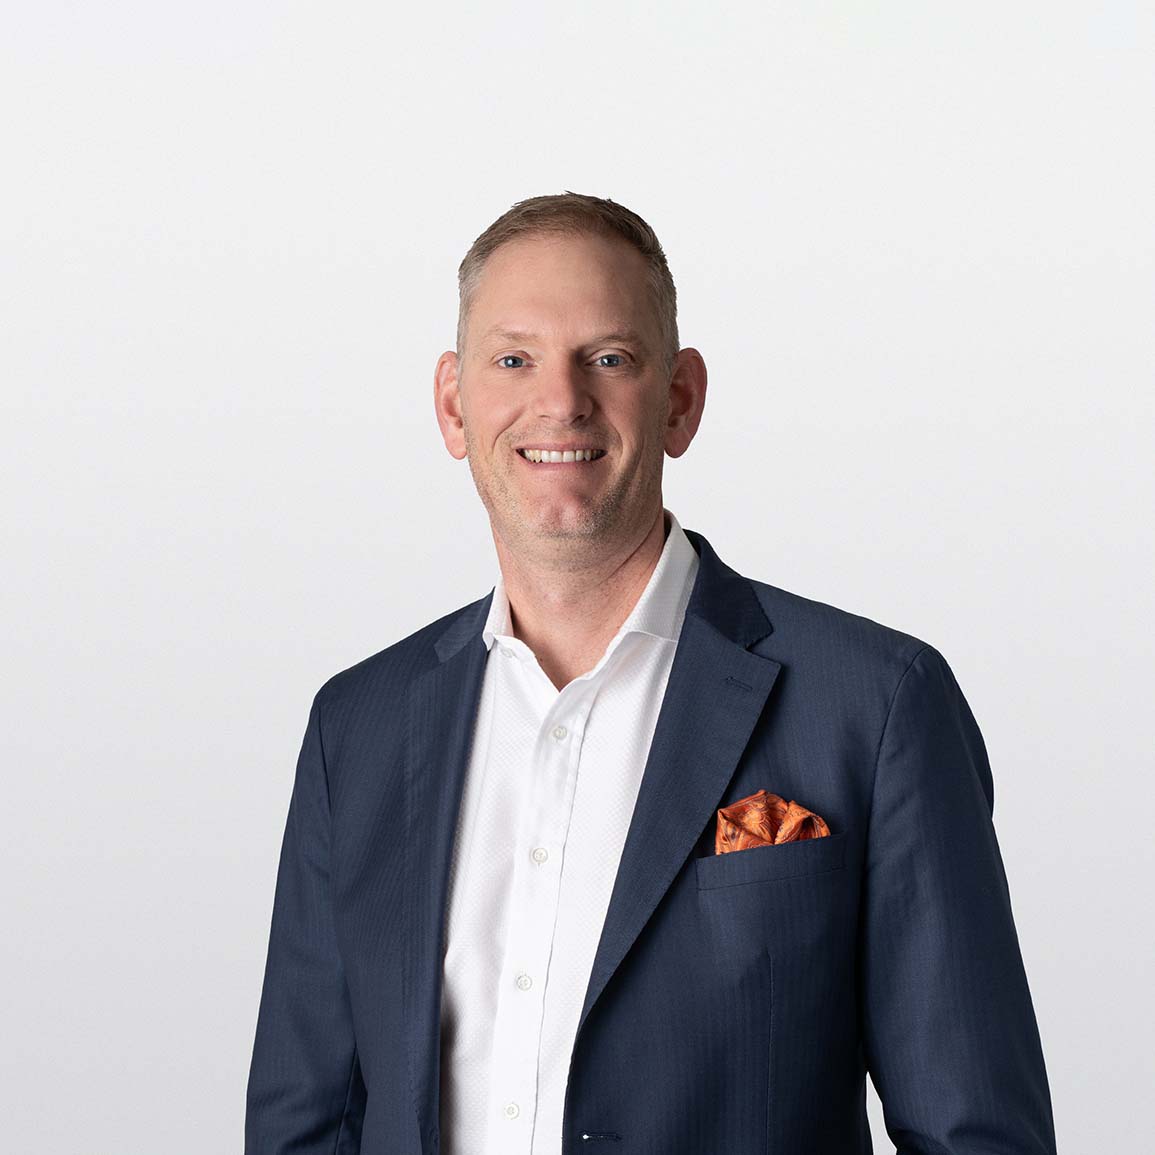  Image of Todd Van der Loos, ATB Senior Financial Advisor, on white background.